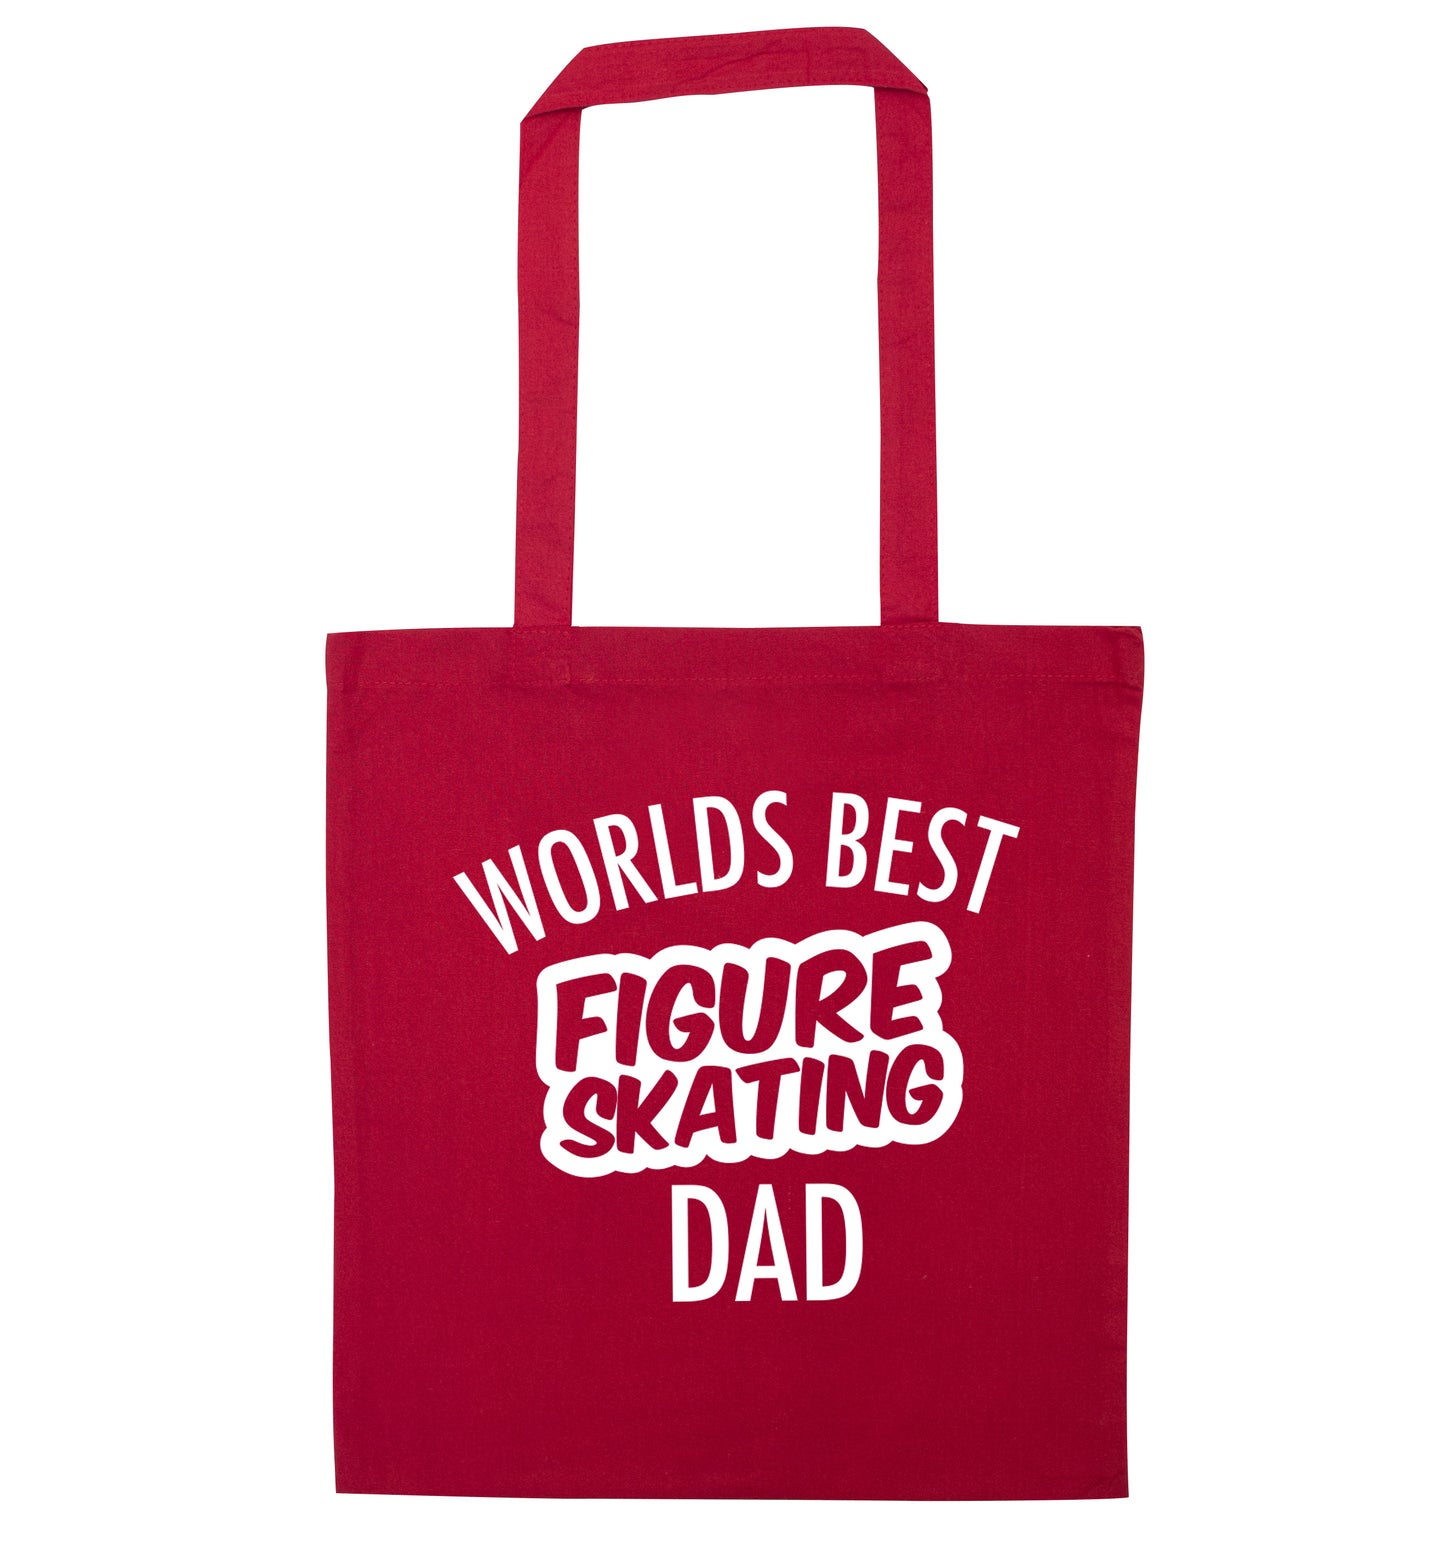 Worlds best figure skating dad red tote bag